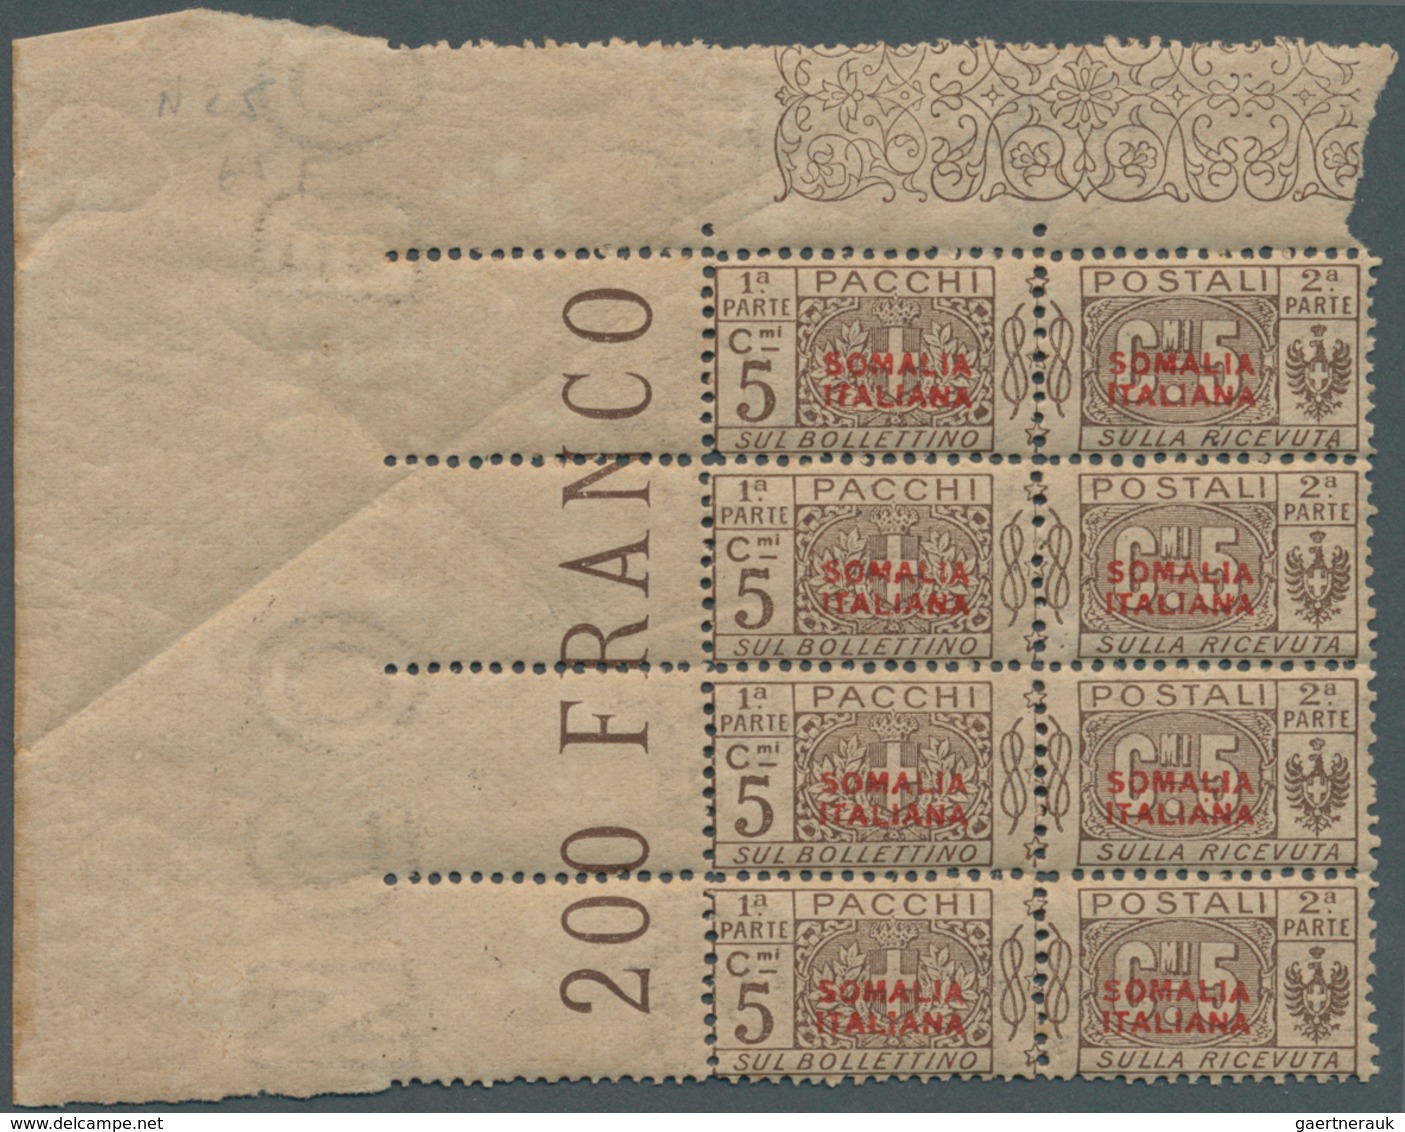 Italienisch-Somaliland - Paketmarken: 1926, packet stamps with red overprint "SOMALIA ITALIANA" in u